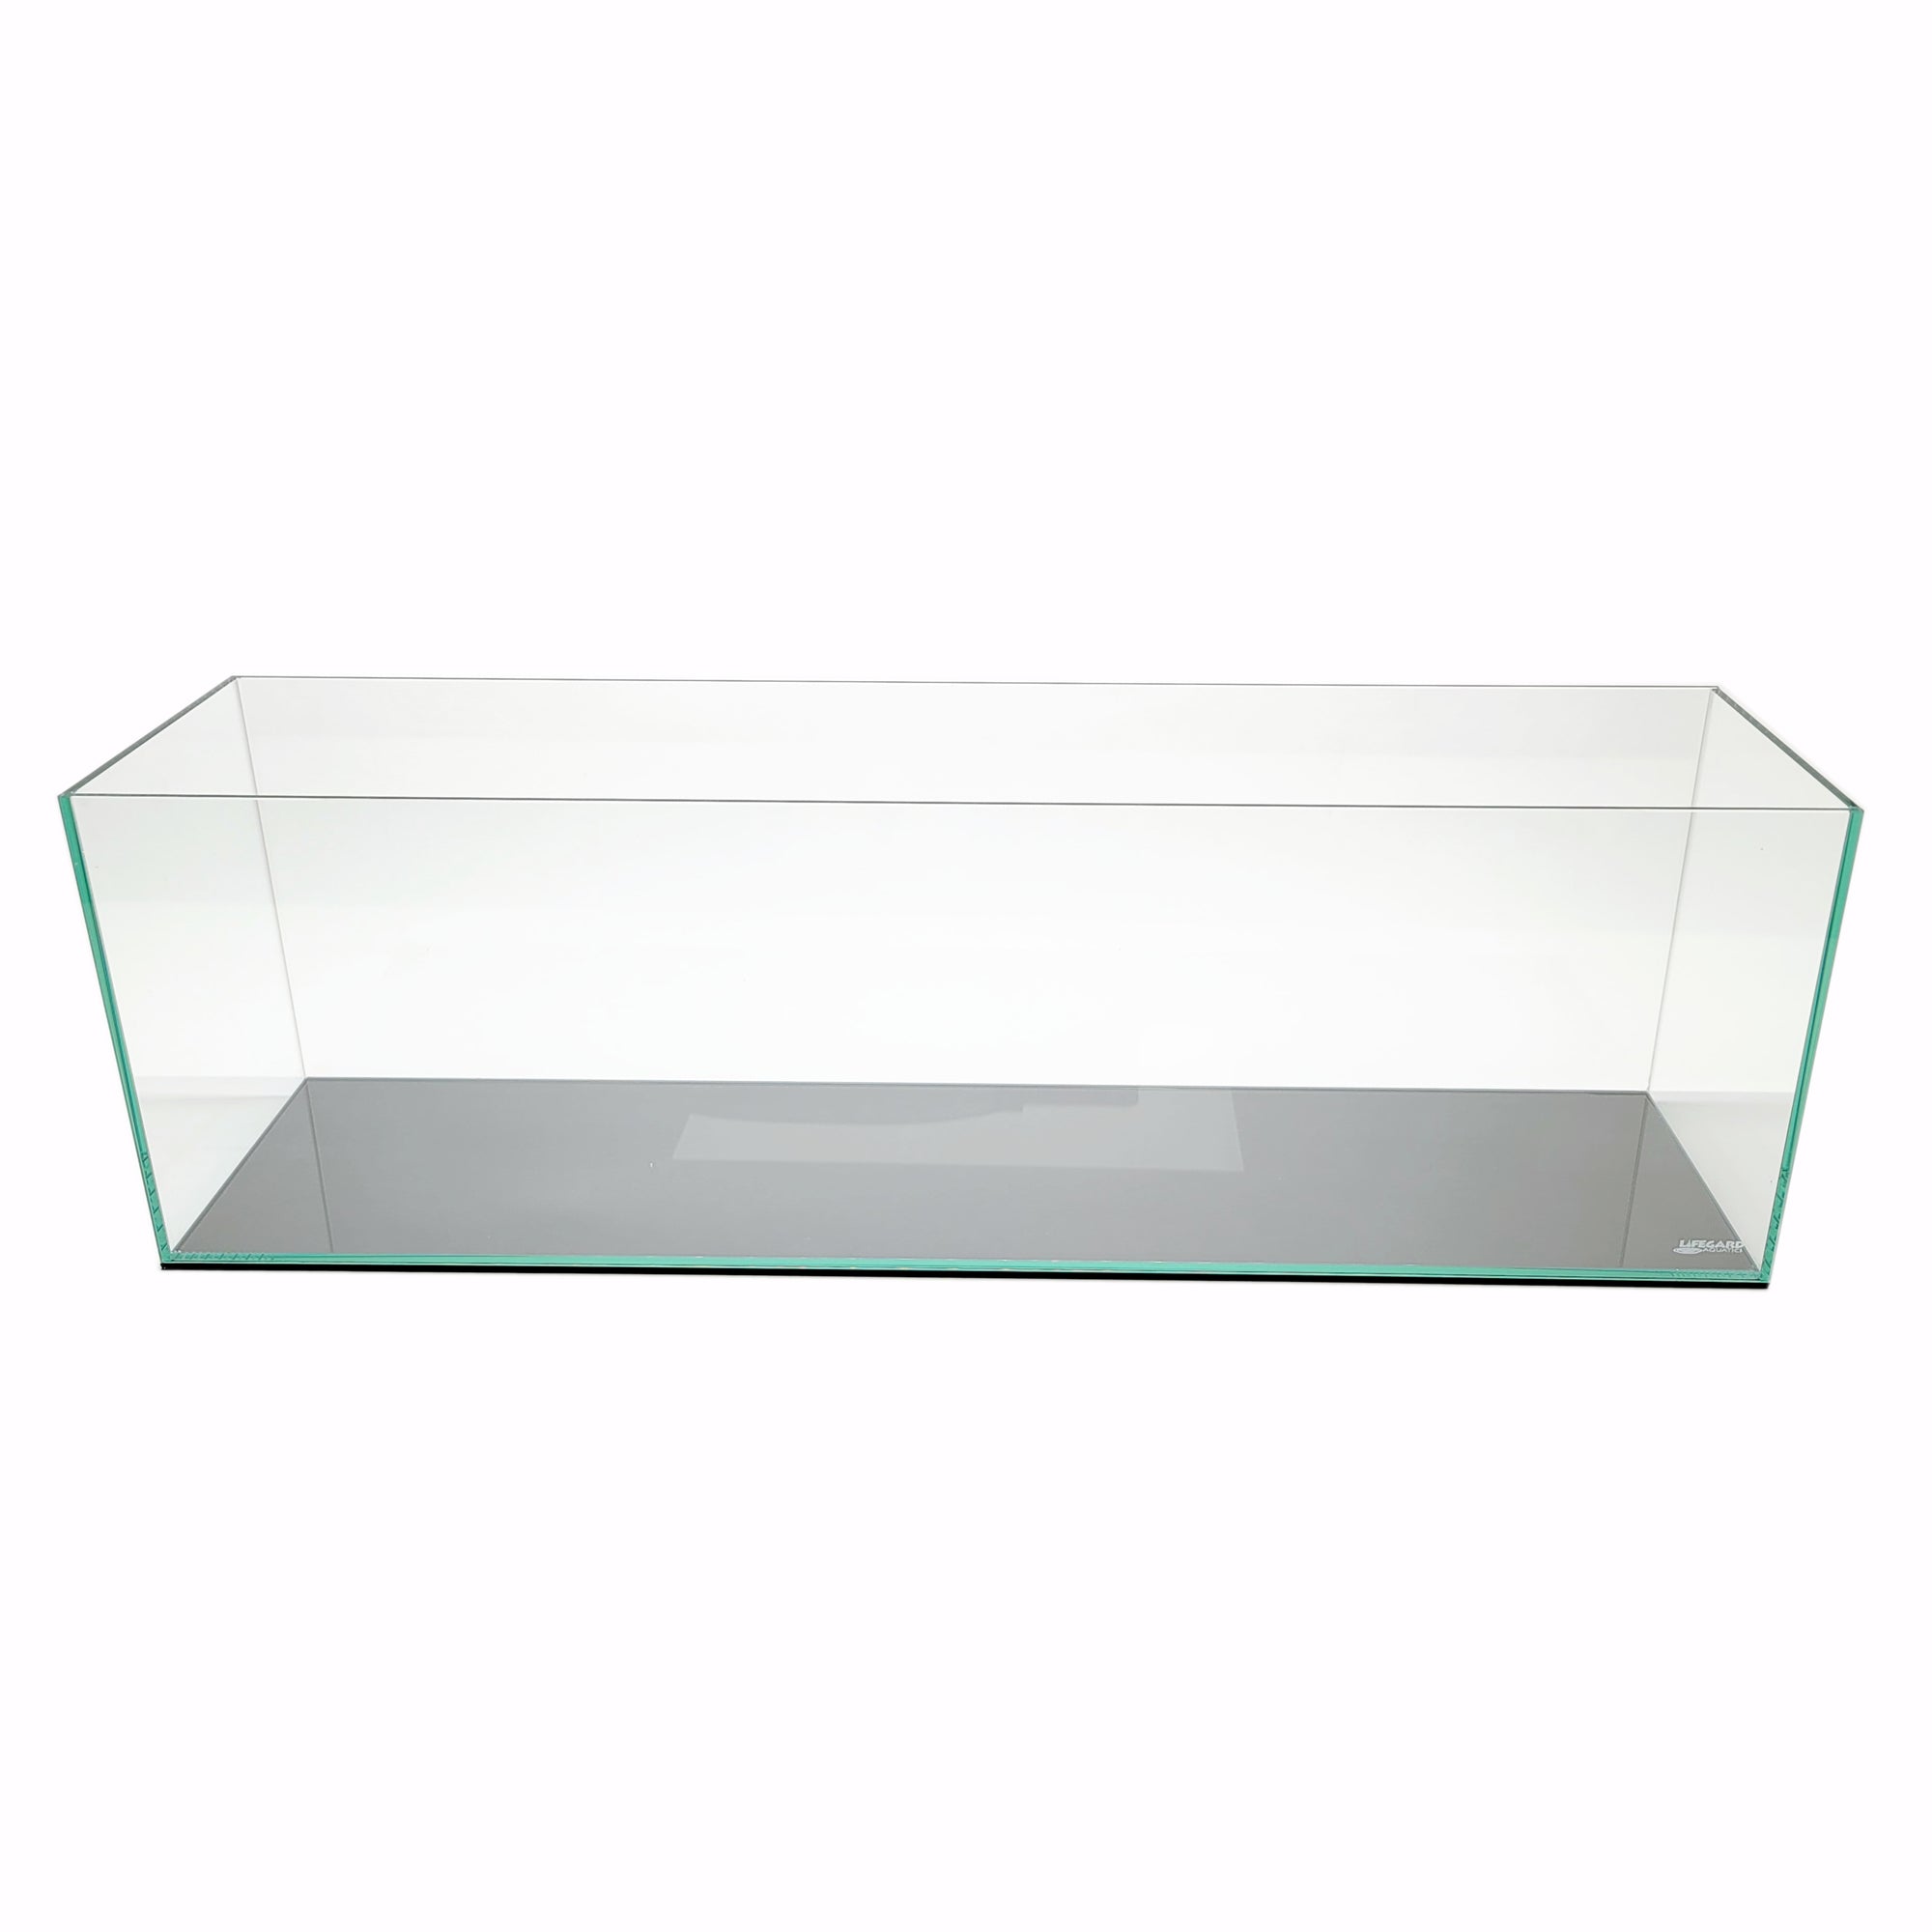 Acrylic Divider Plate for 22 Gallon Bookshelf Aquariums - CLEAR